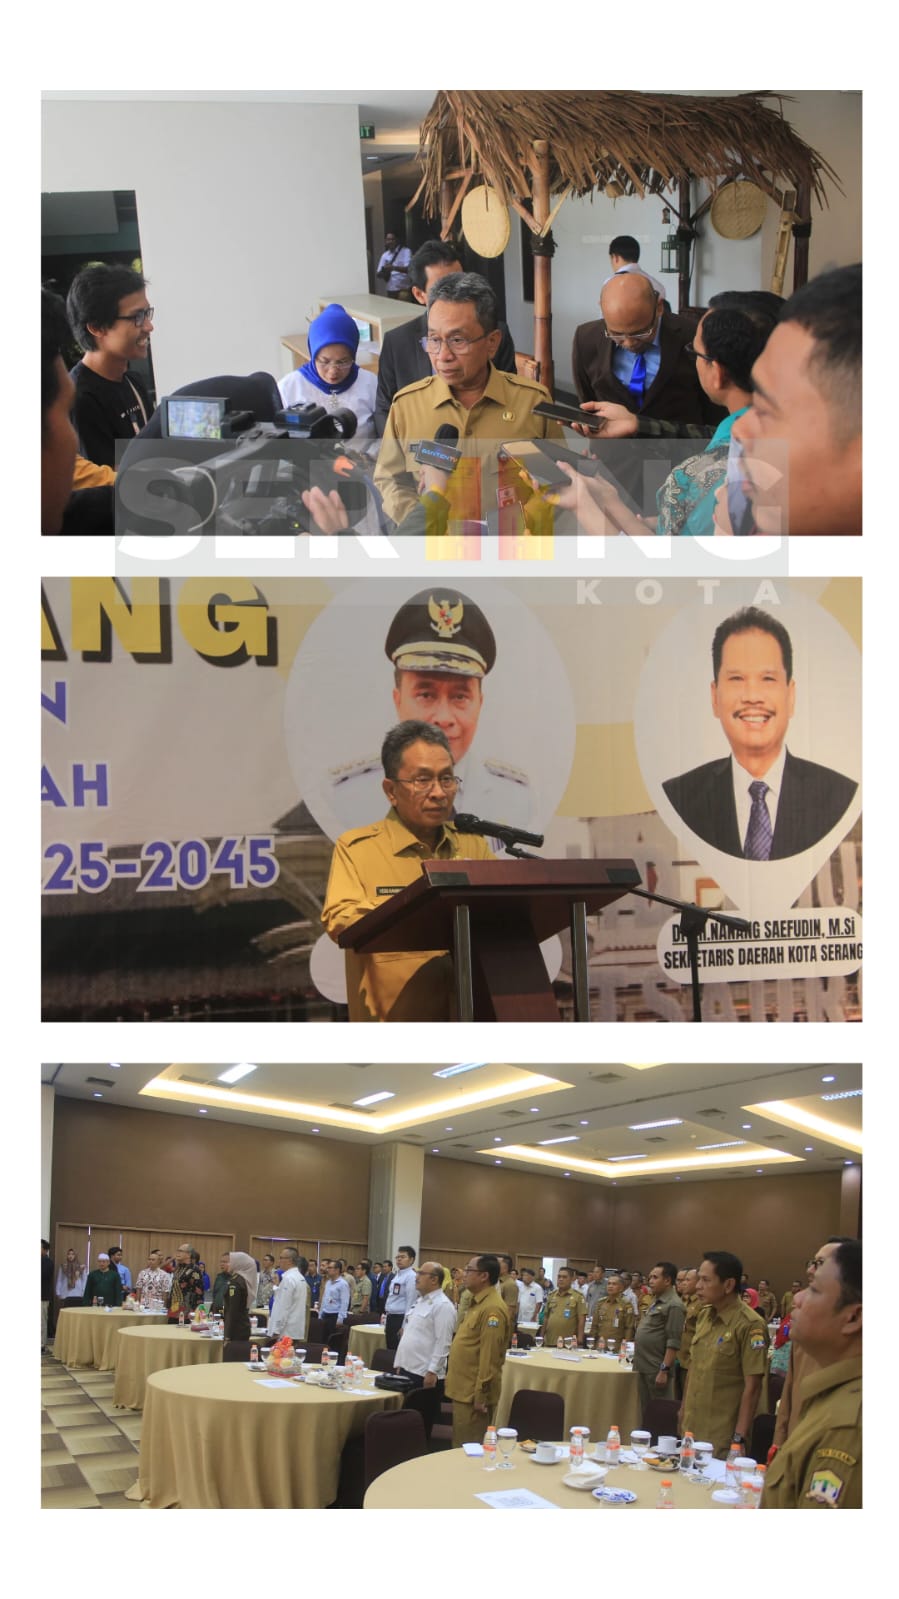 Pj Walikota Serang membuka RPJPD Kota Serang tahun 2025-2045, Pj Walikota rencanakan E-parking di Kota Serang.